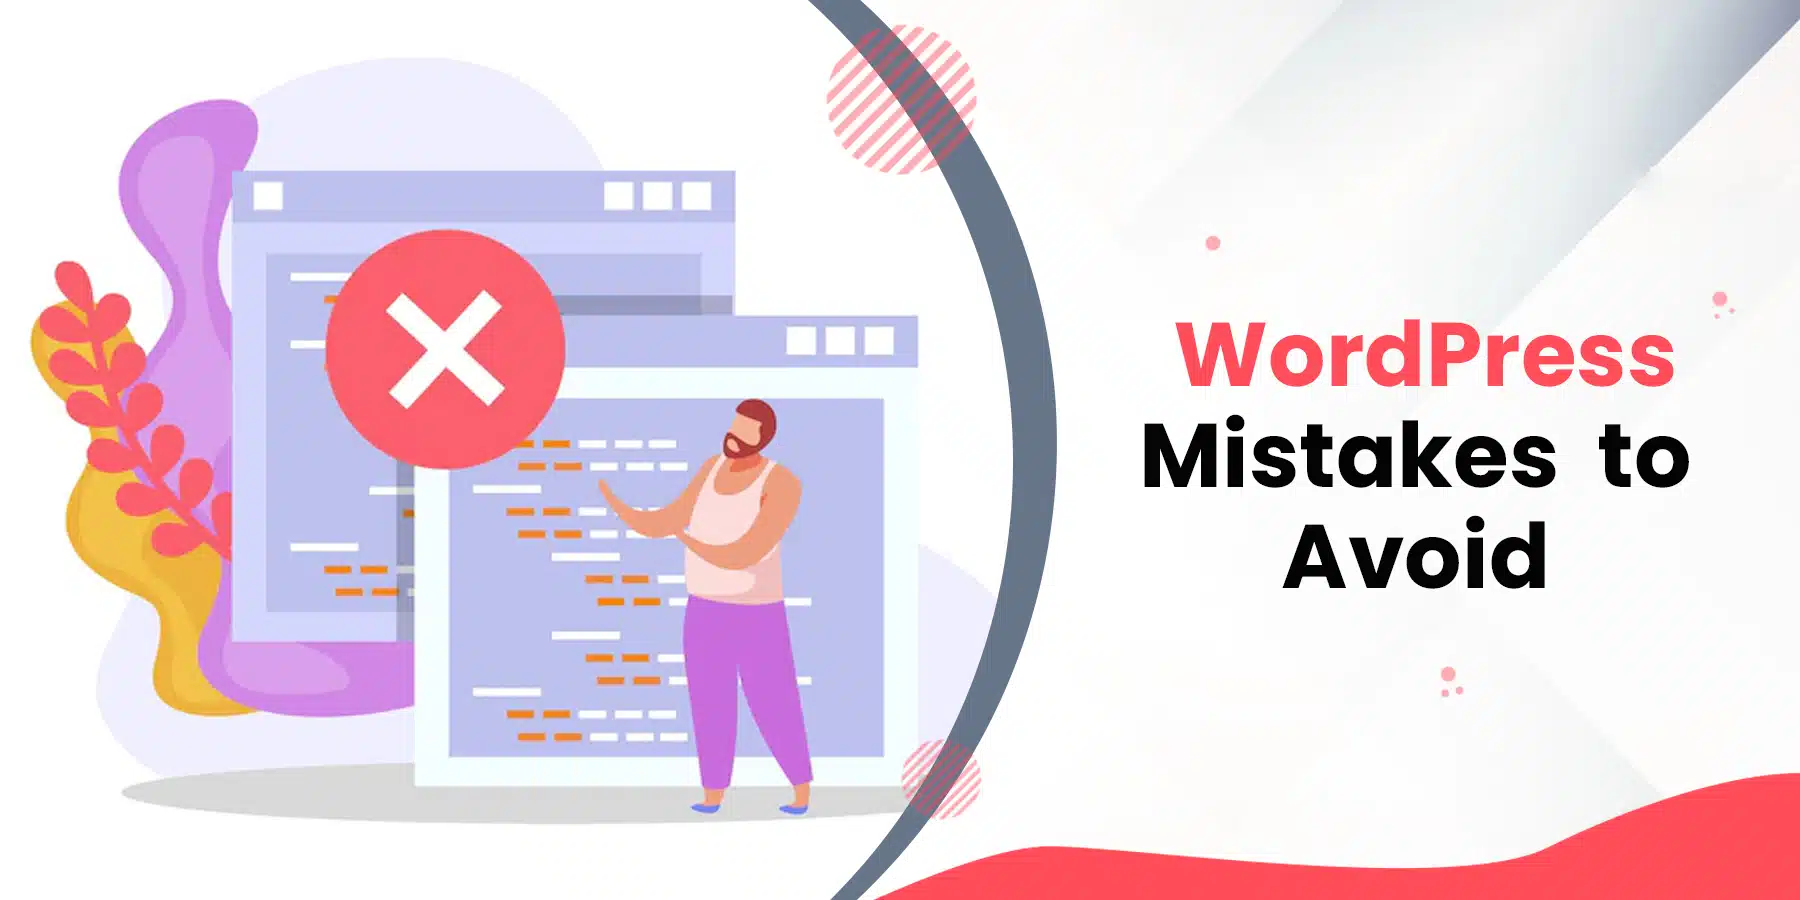 WordPress Mistakes to Avoid